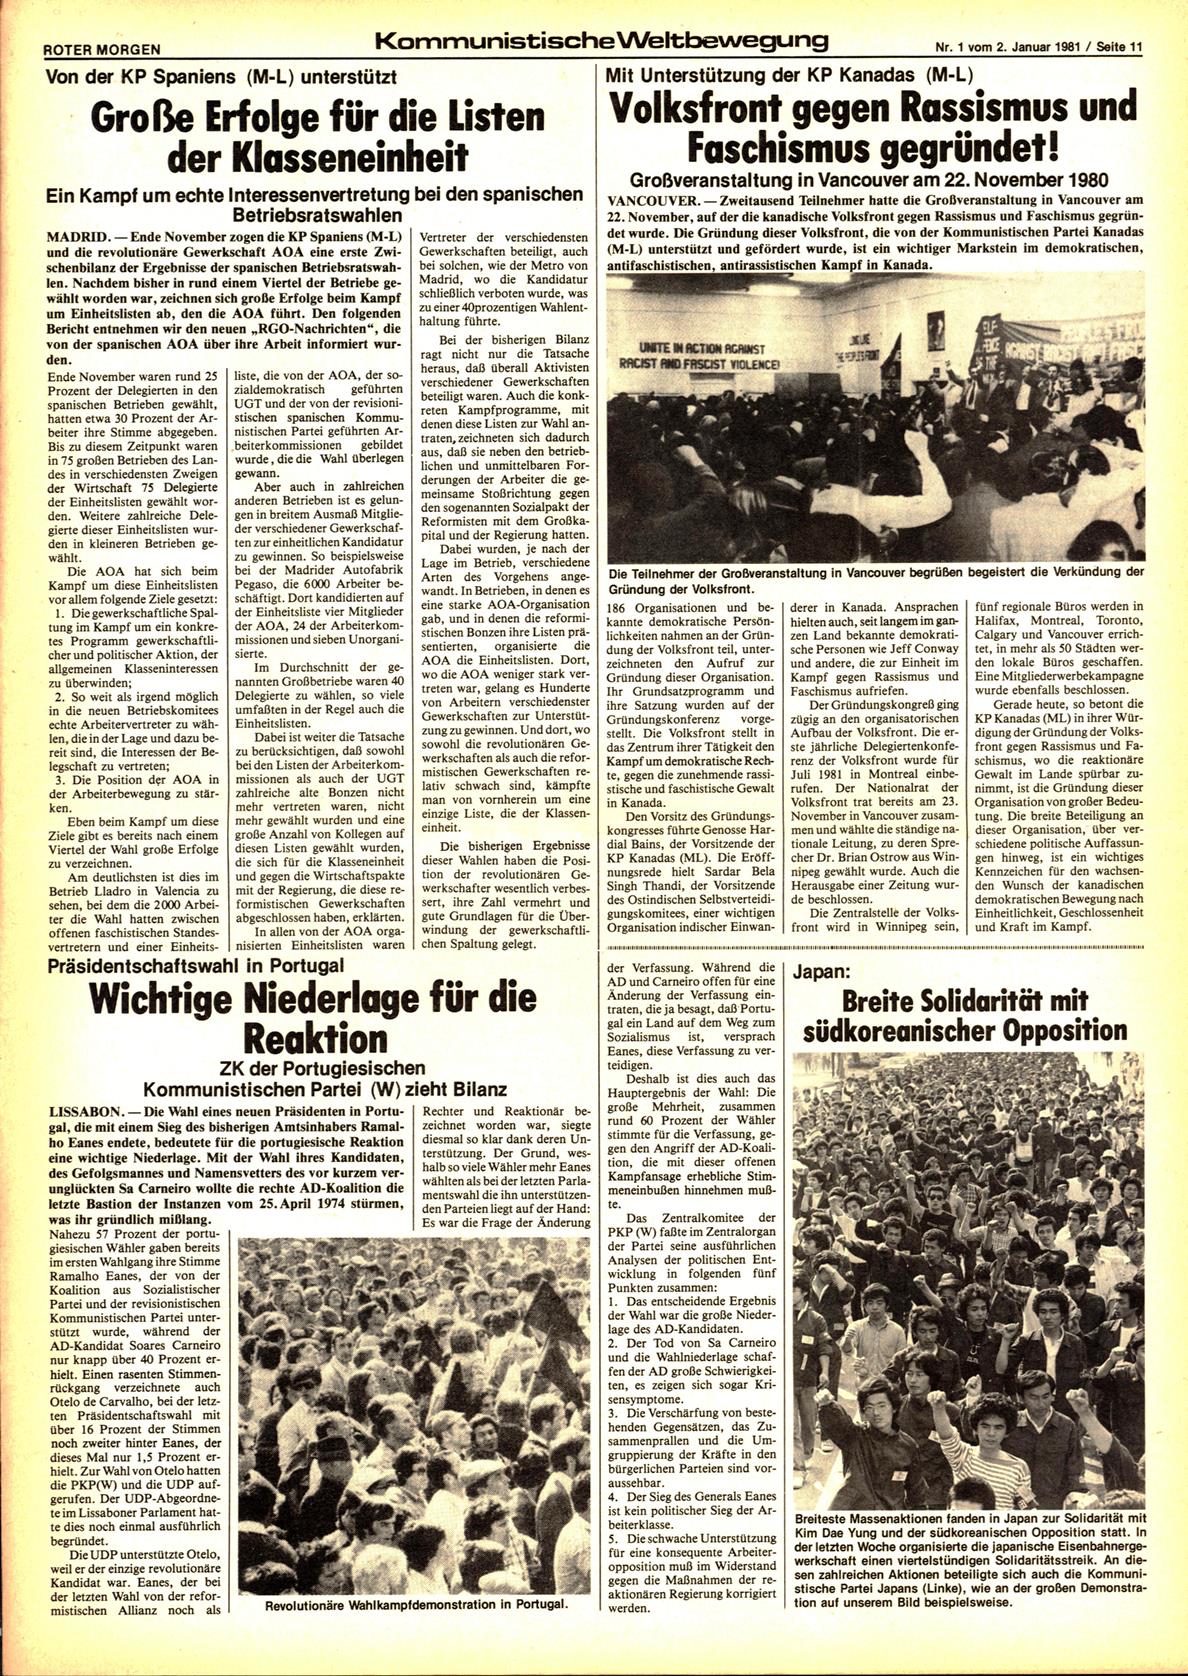 Roter Morgen, 15. Jg., 2. Januar 1981, Nr. 1, Seite 11